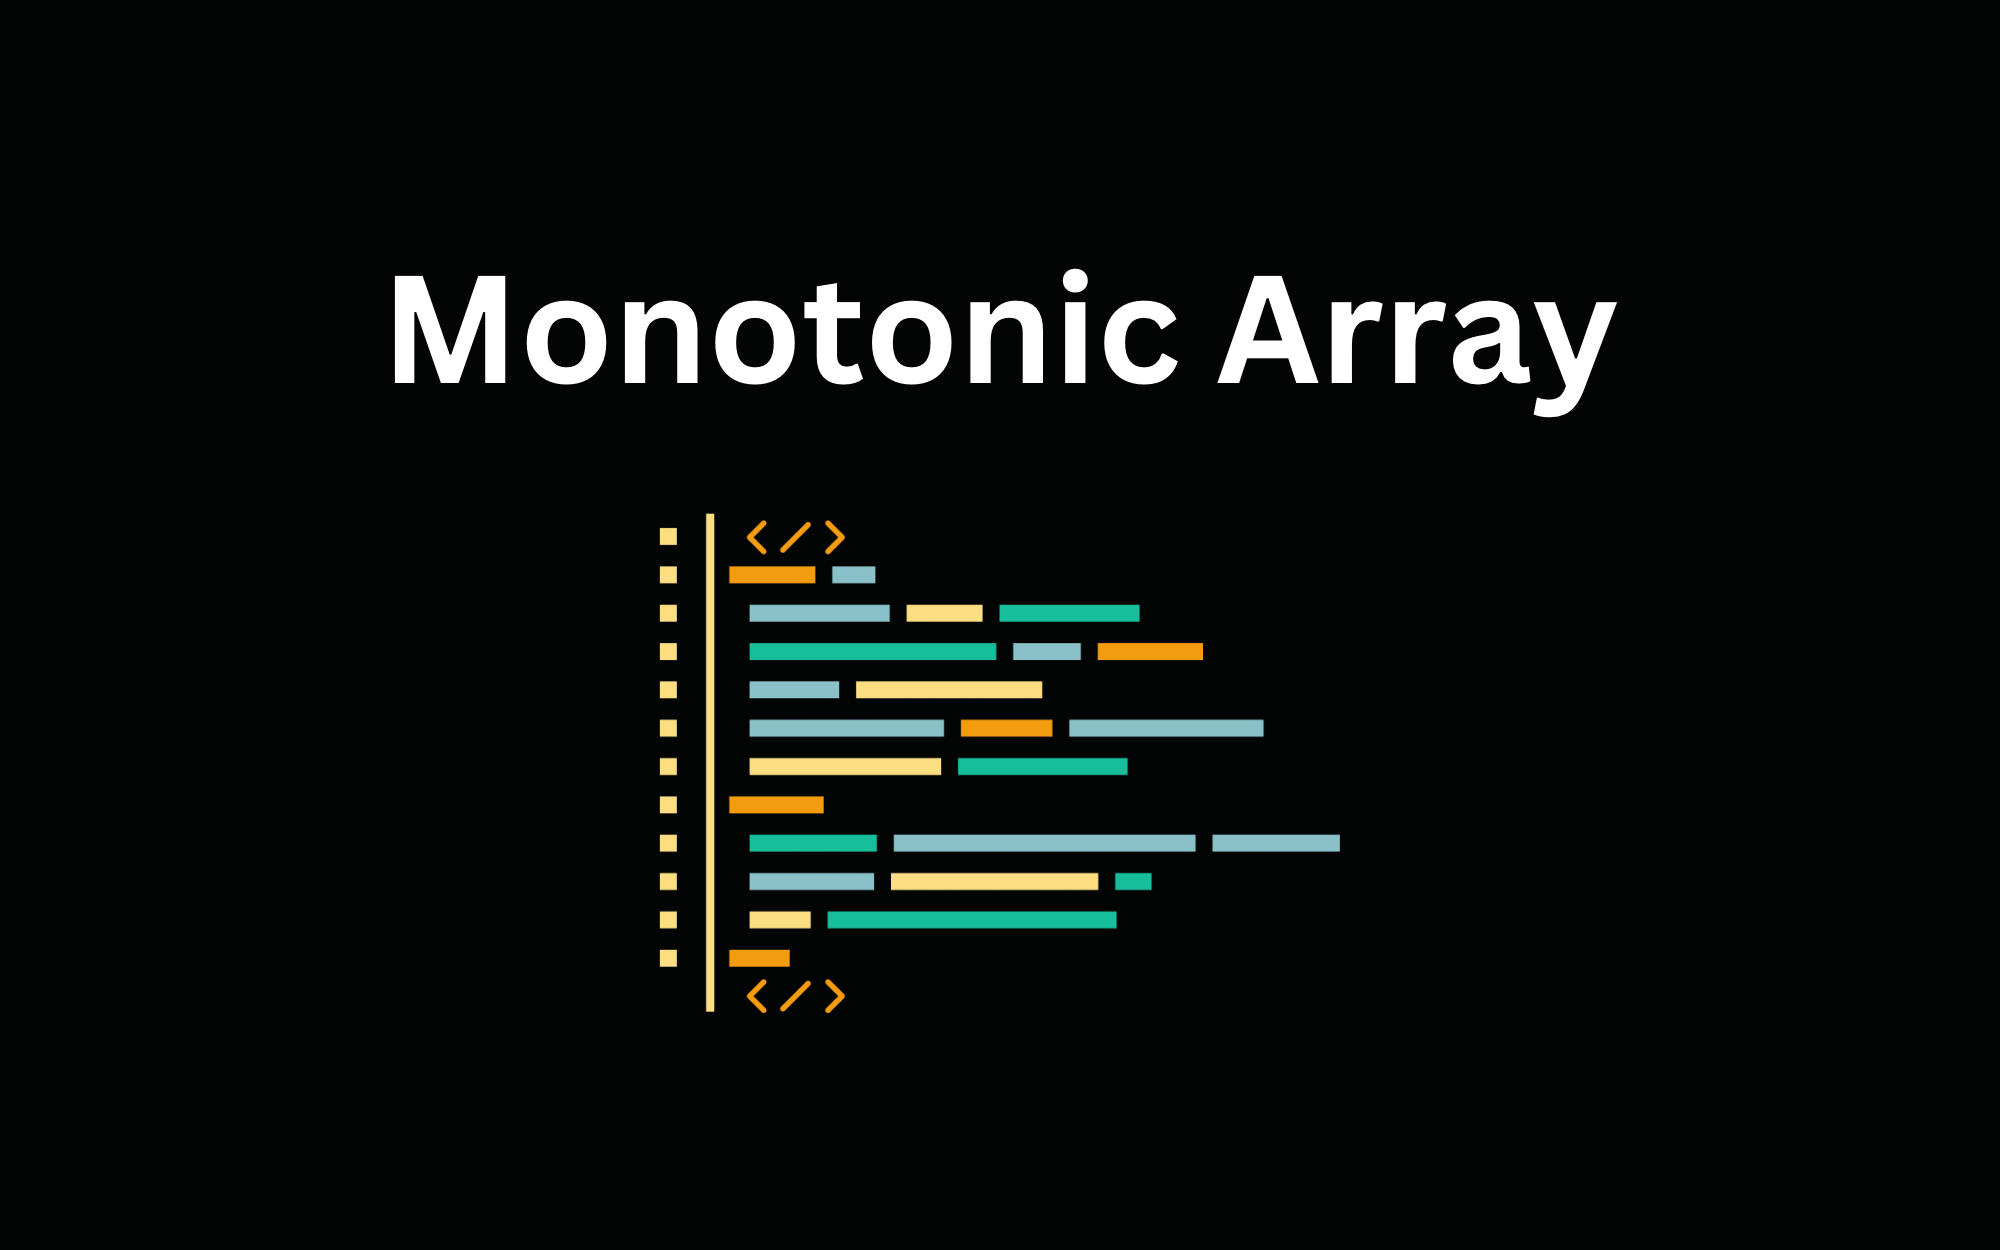 Monotonic Array Problem